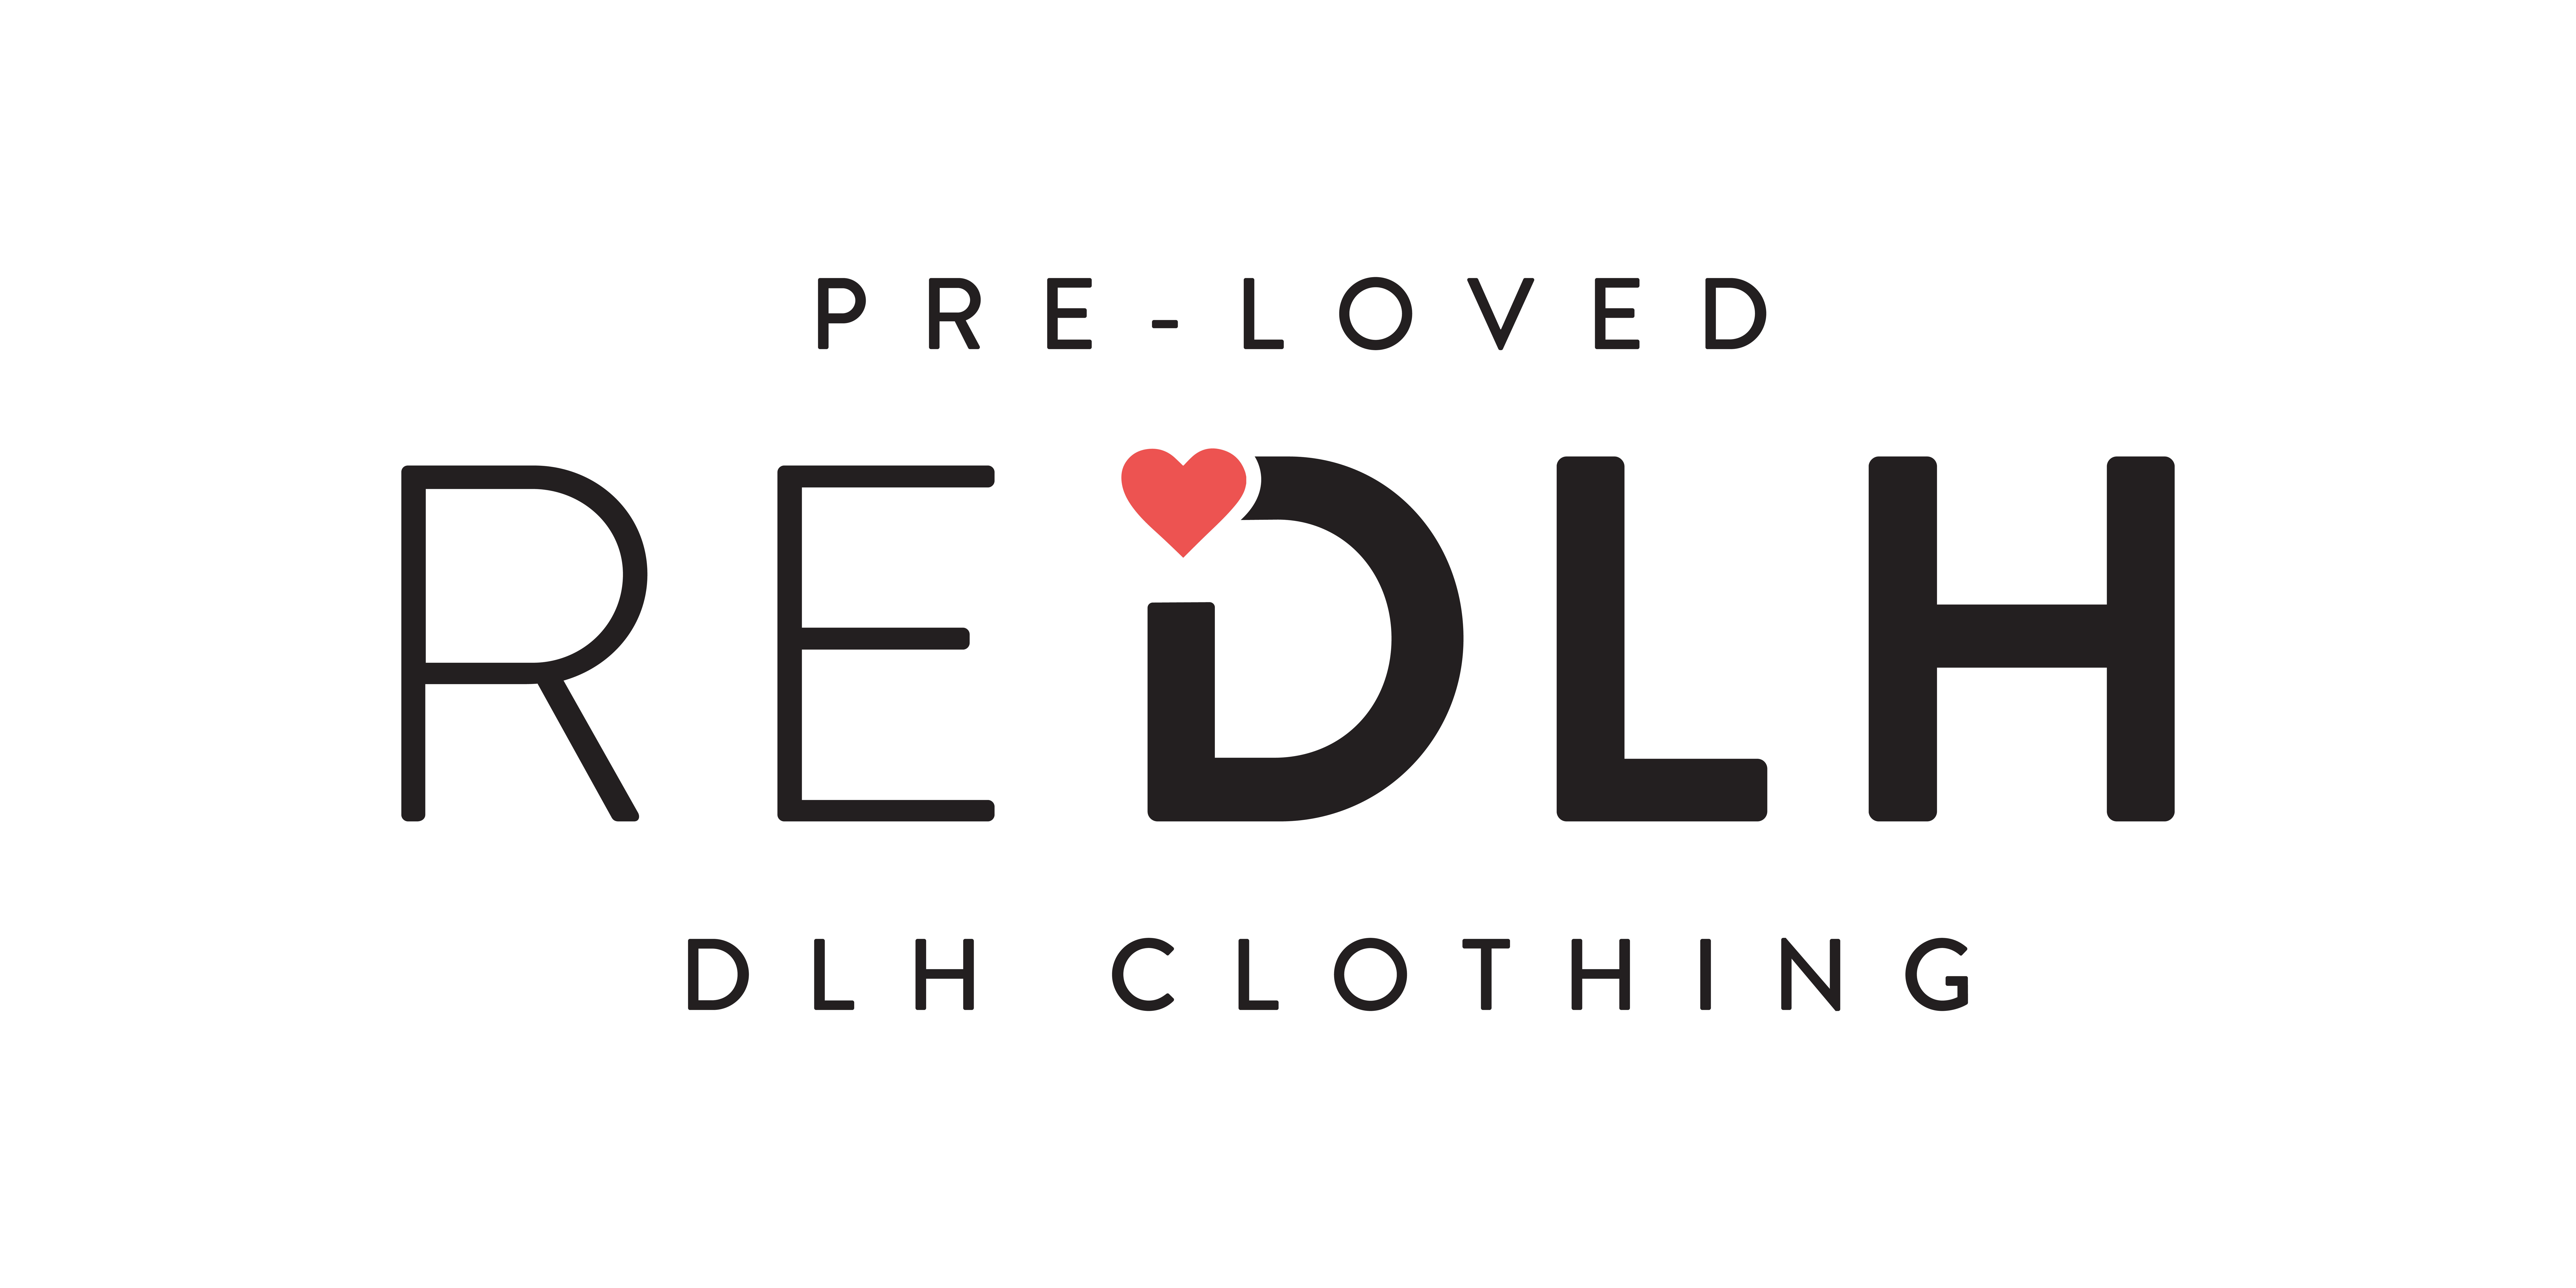 DLH Clothing's trade-in program RE DLH, branding design created by Šek Design Studio